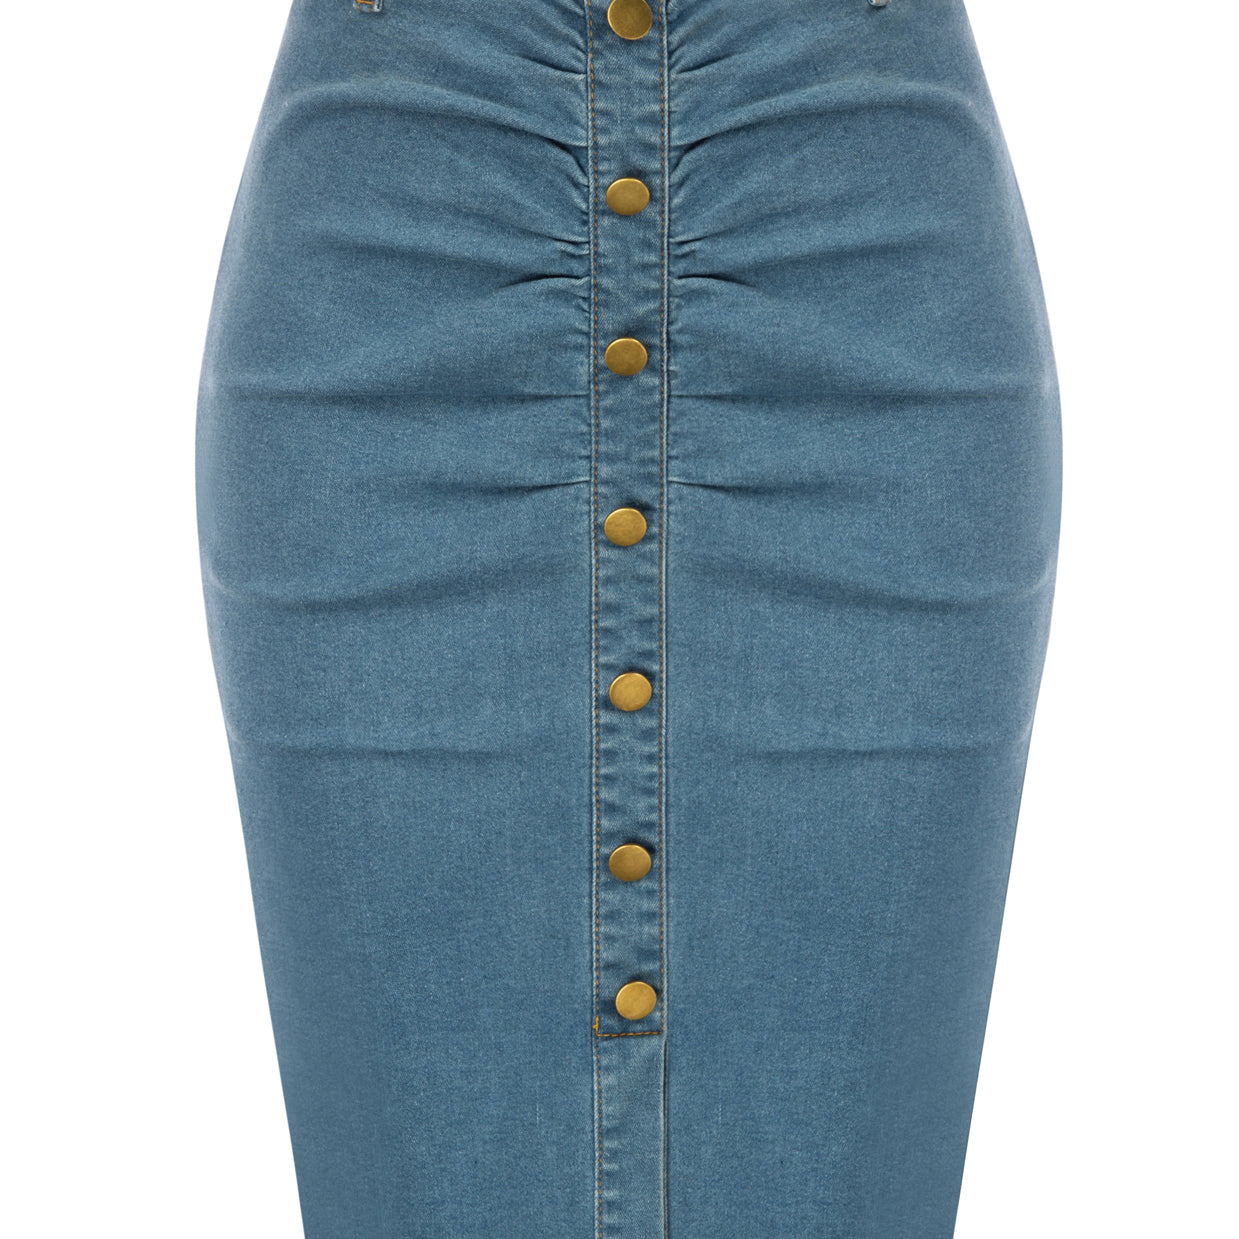 Vintage Jean Skirt